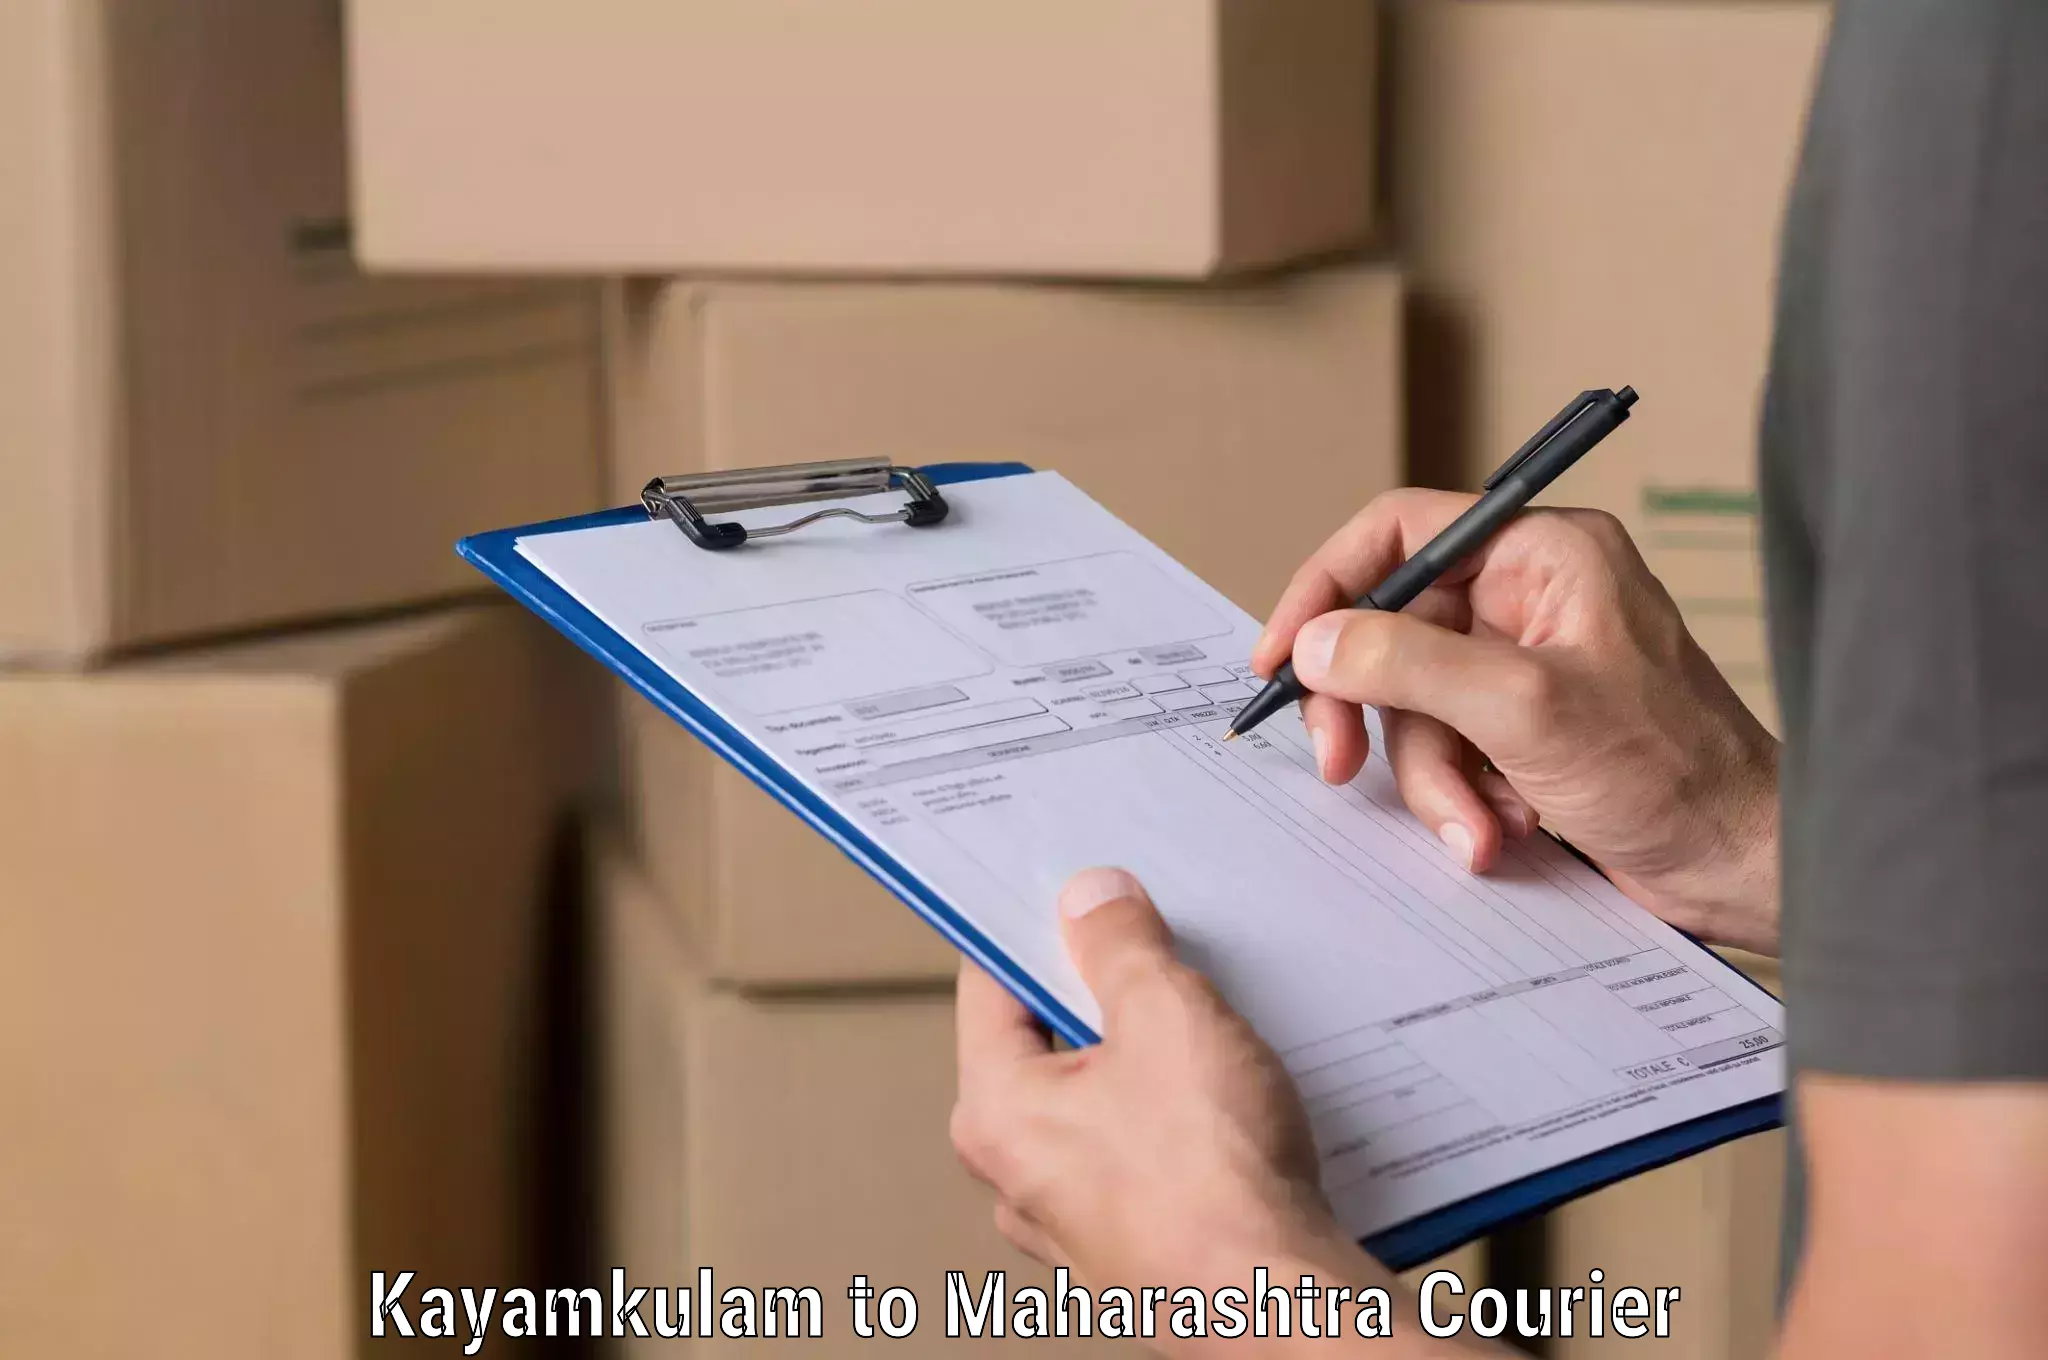 Business delivery service Kayamkulam to Andheri